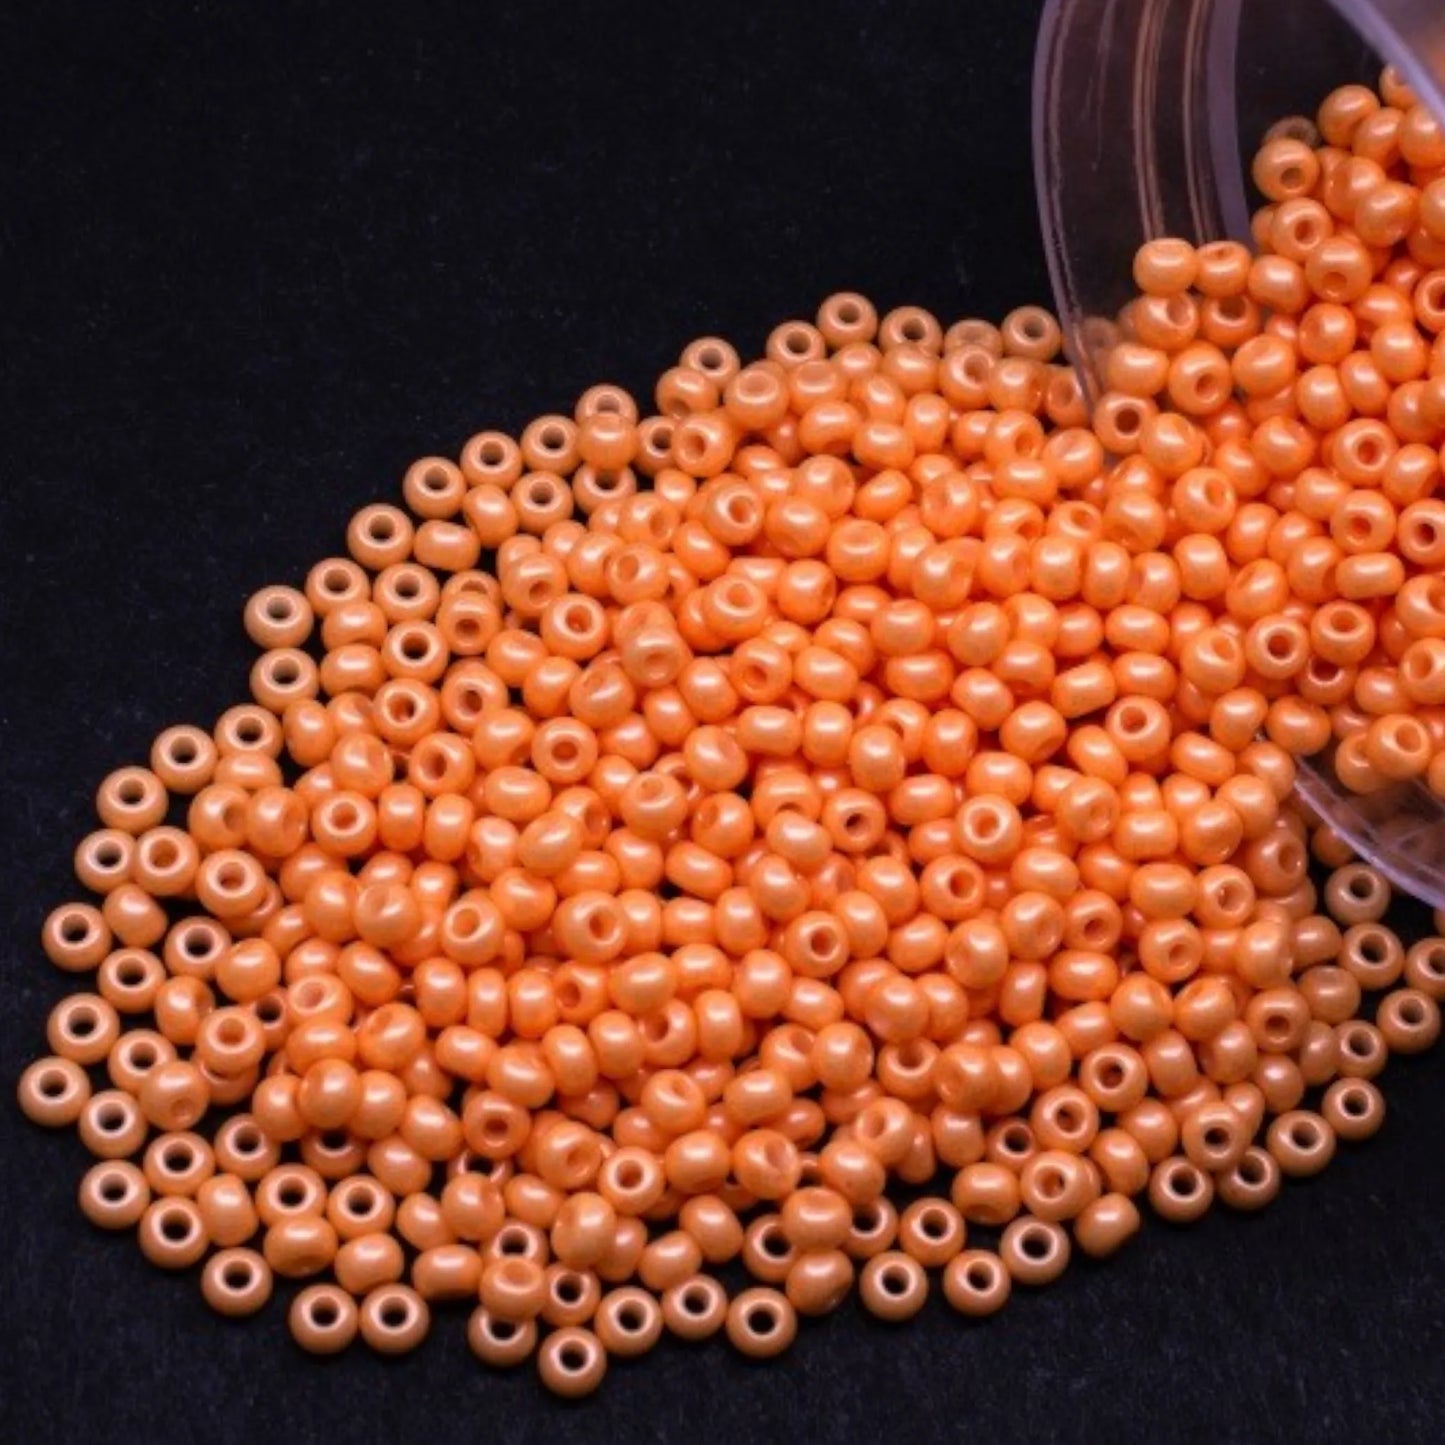 16992 Czech seed beads PRECIOSA round 10/0 peach orange. Chalk - Terra Pearl.